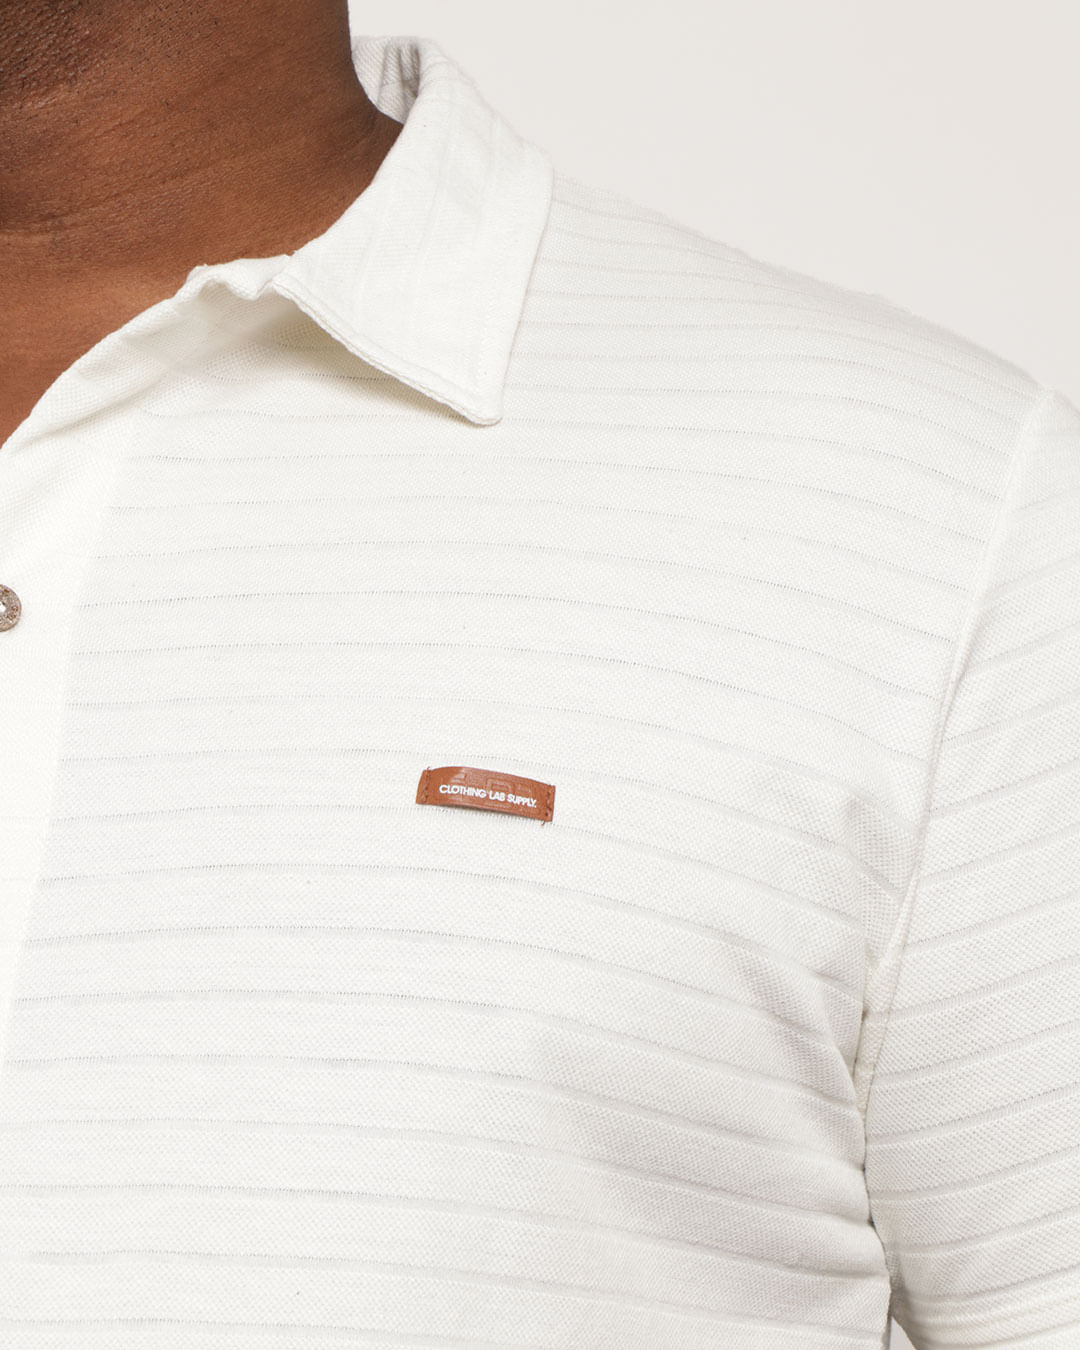 Camisa-Plus-Size-Masculina-Listrada-Texturizada-Off-White